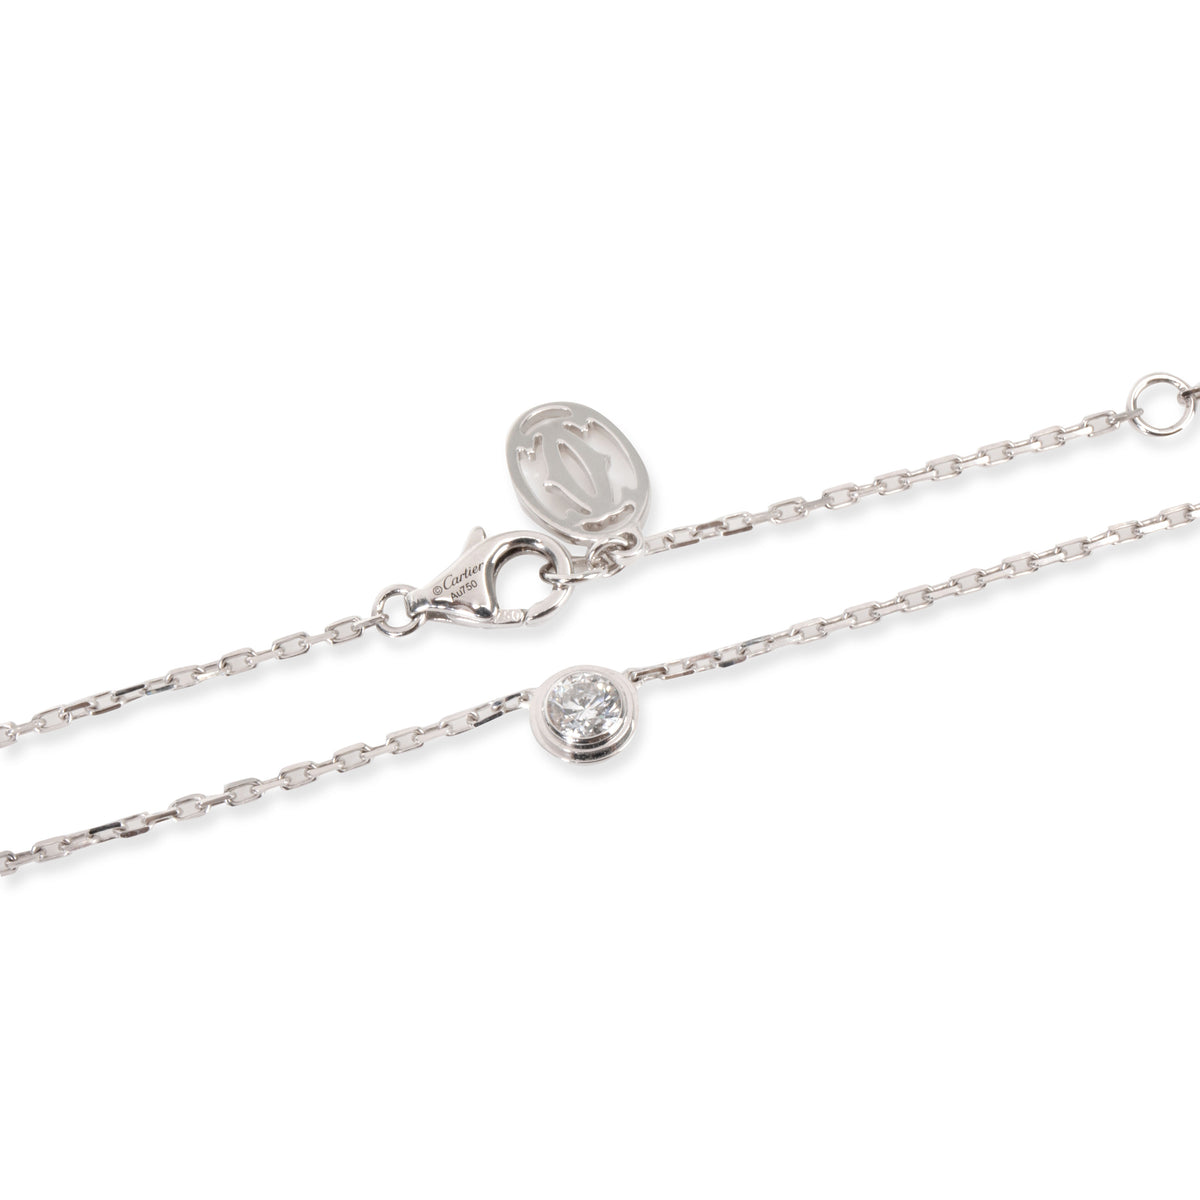 Cartier Diamants Legers Diamond Necklace in 18K White Gold 0.18 CTW